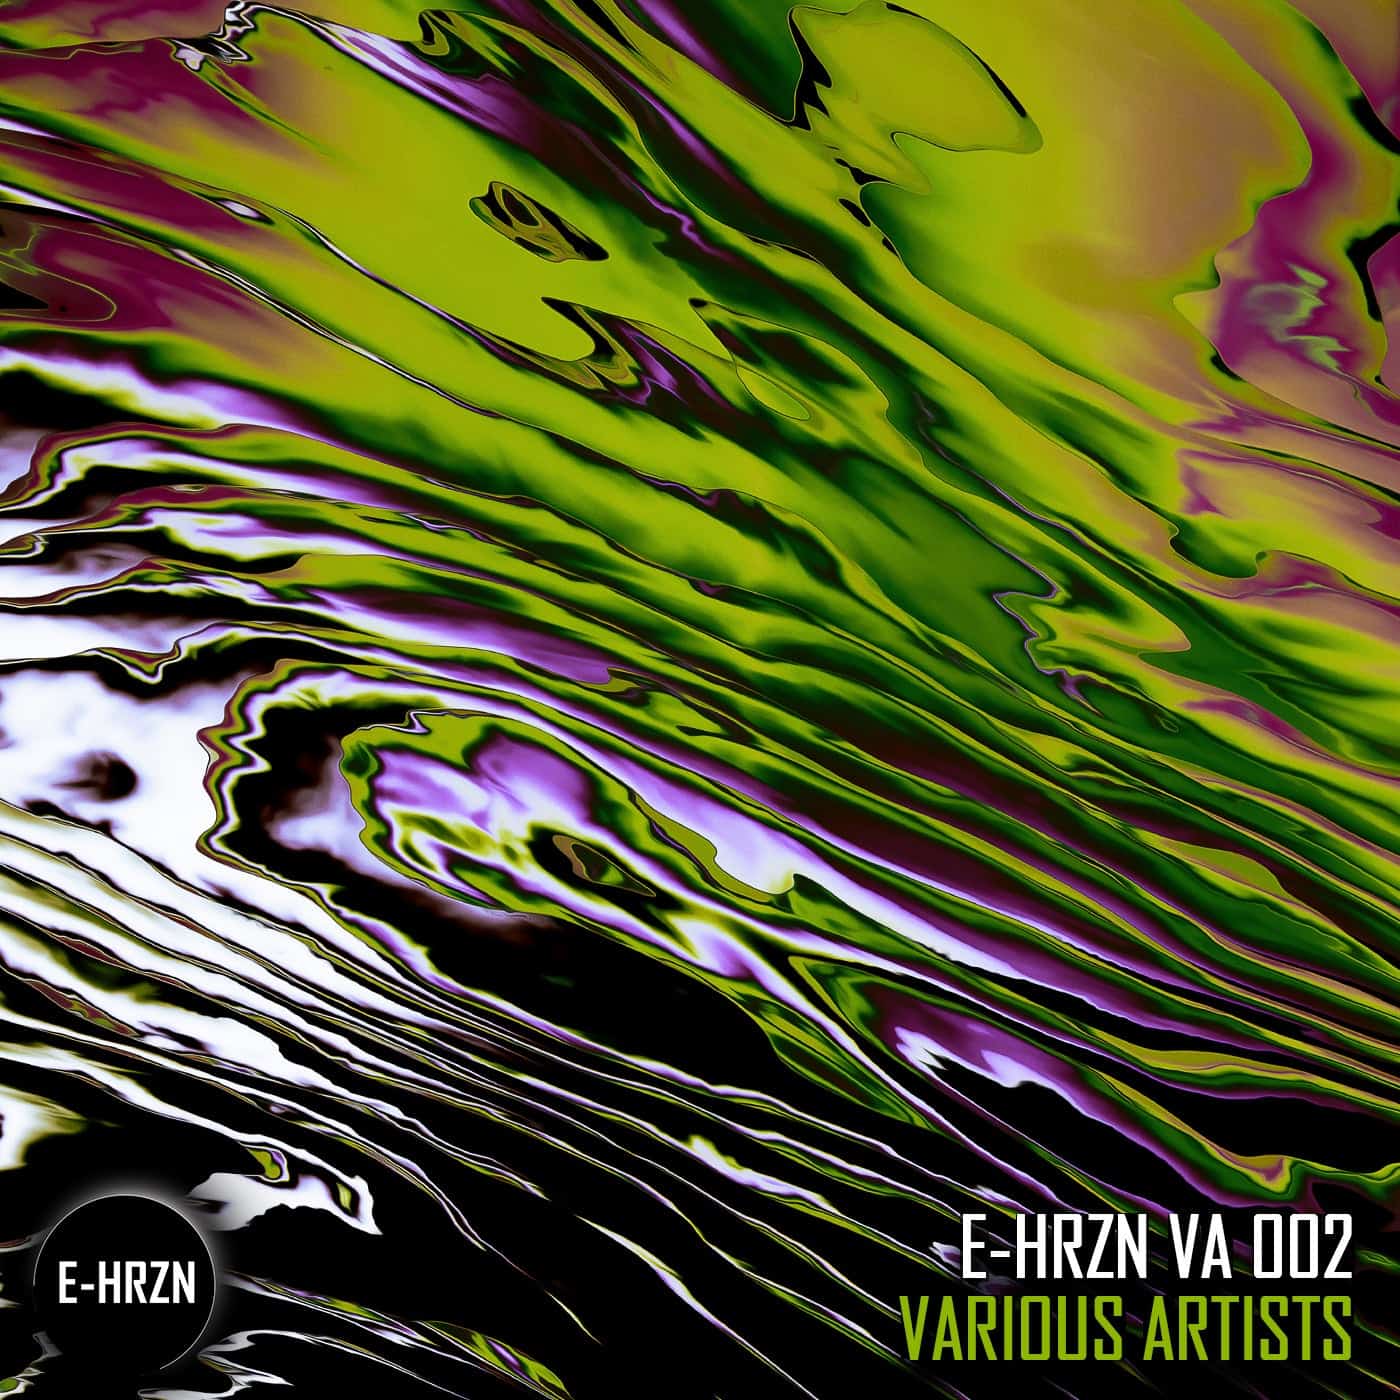 image cover: VA - E-HRZN Presents: Various Artists 002 / EHRZNVA002